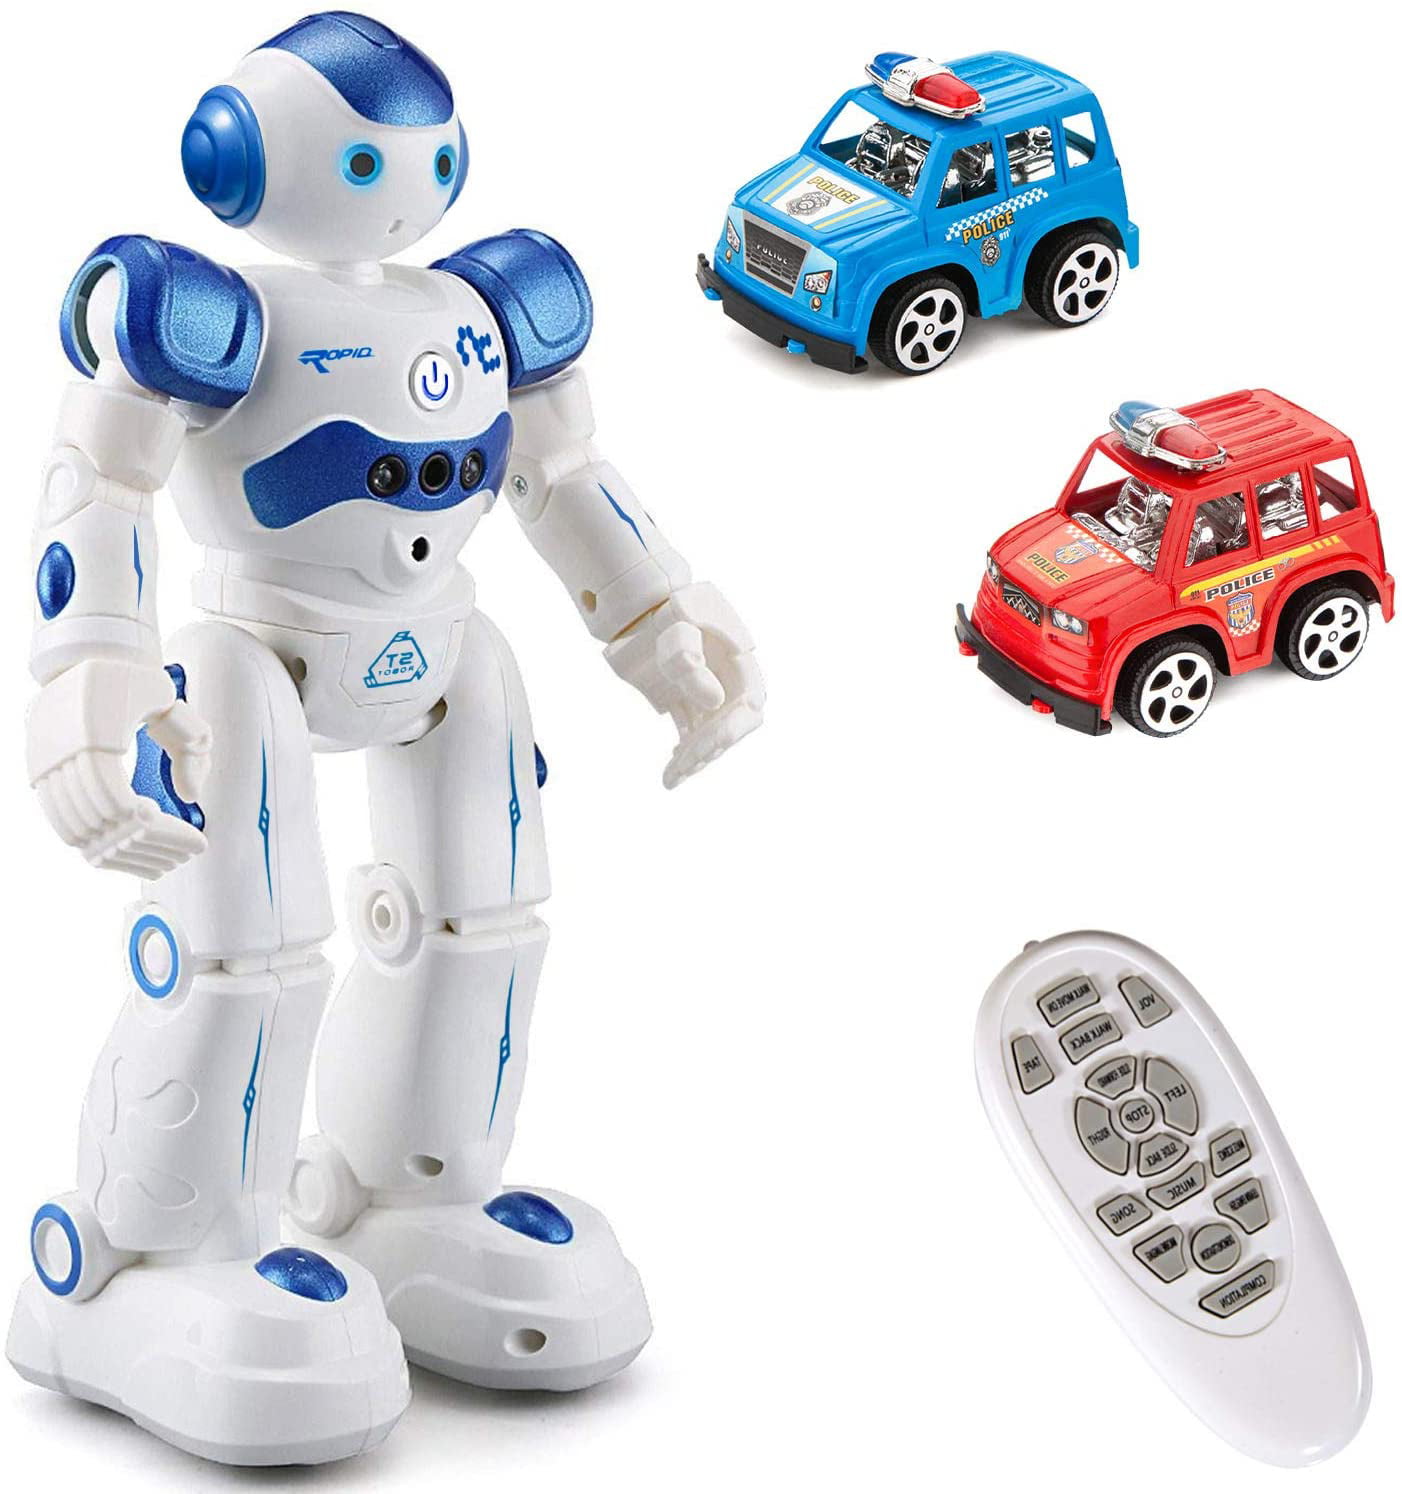 Blue Smart Robot Toys Remote Control Robot Nice Gift for Boys Girls kids 